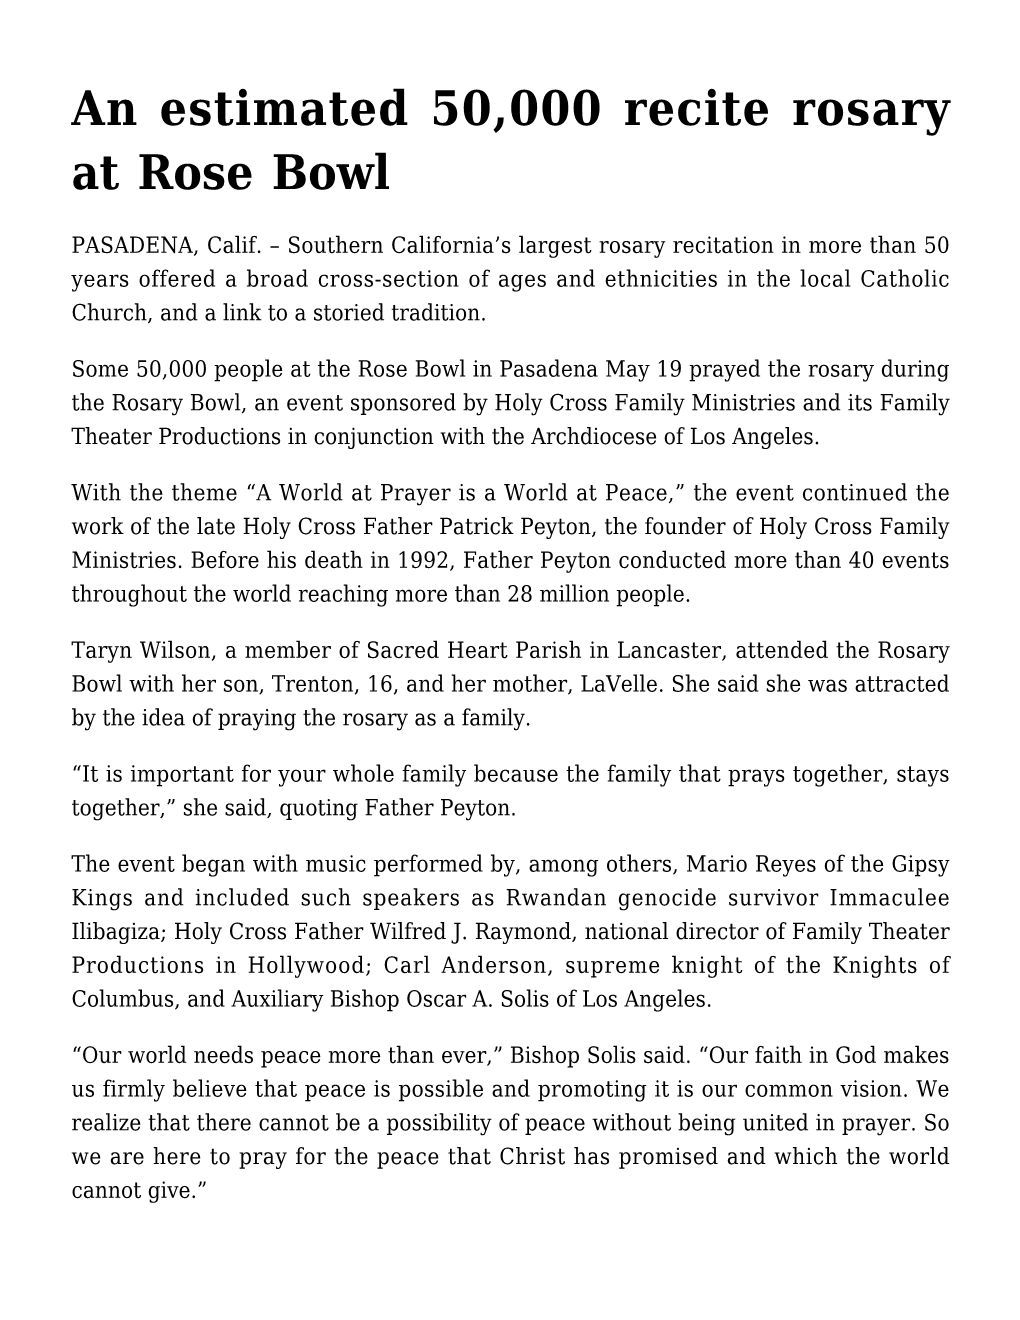 An Estimated 50,000 Recite Rosary at Rose Bowl